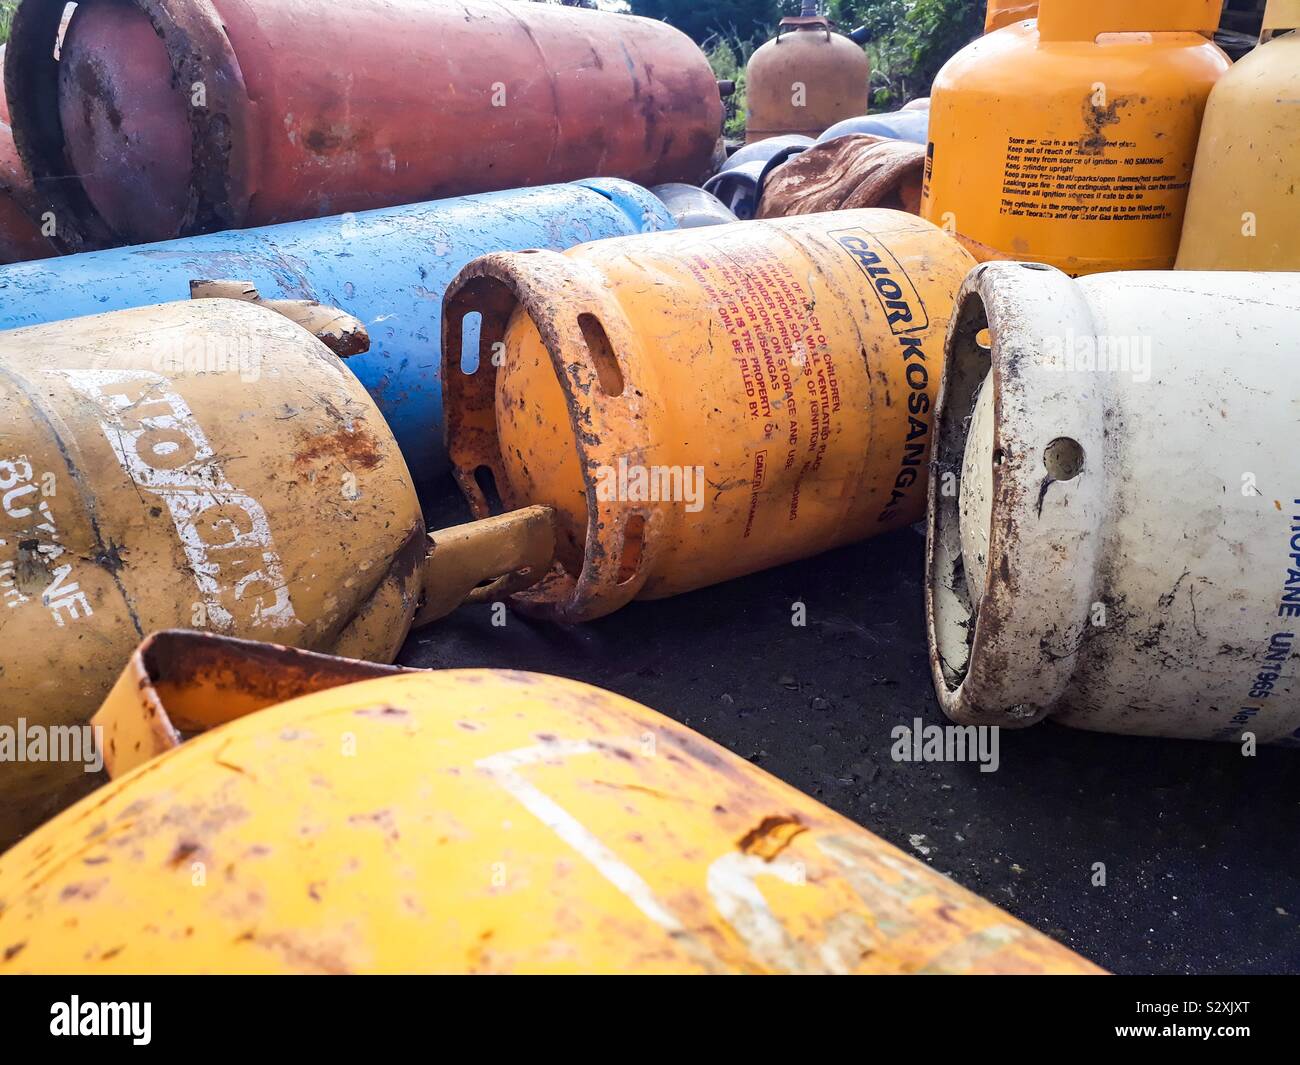 Old, rusty gas bottles on scrapyard. Stock Photo